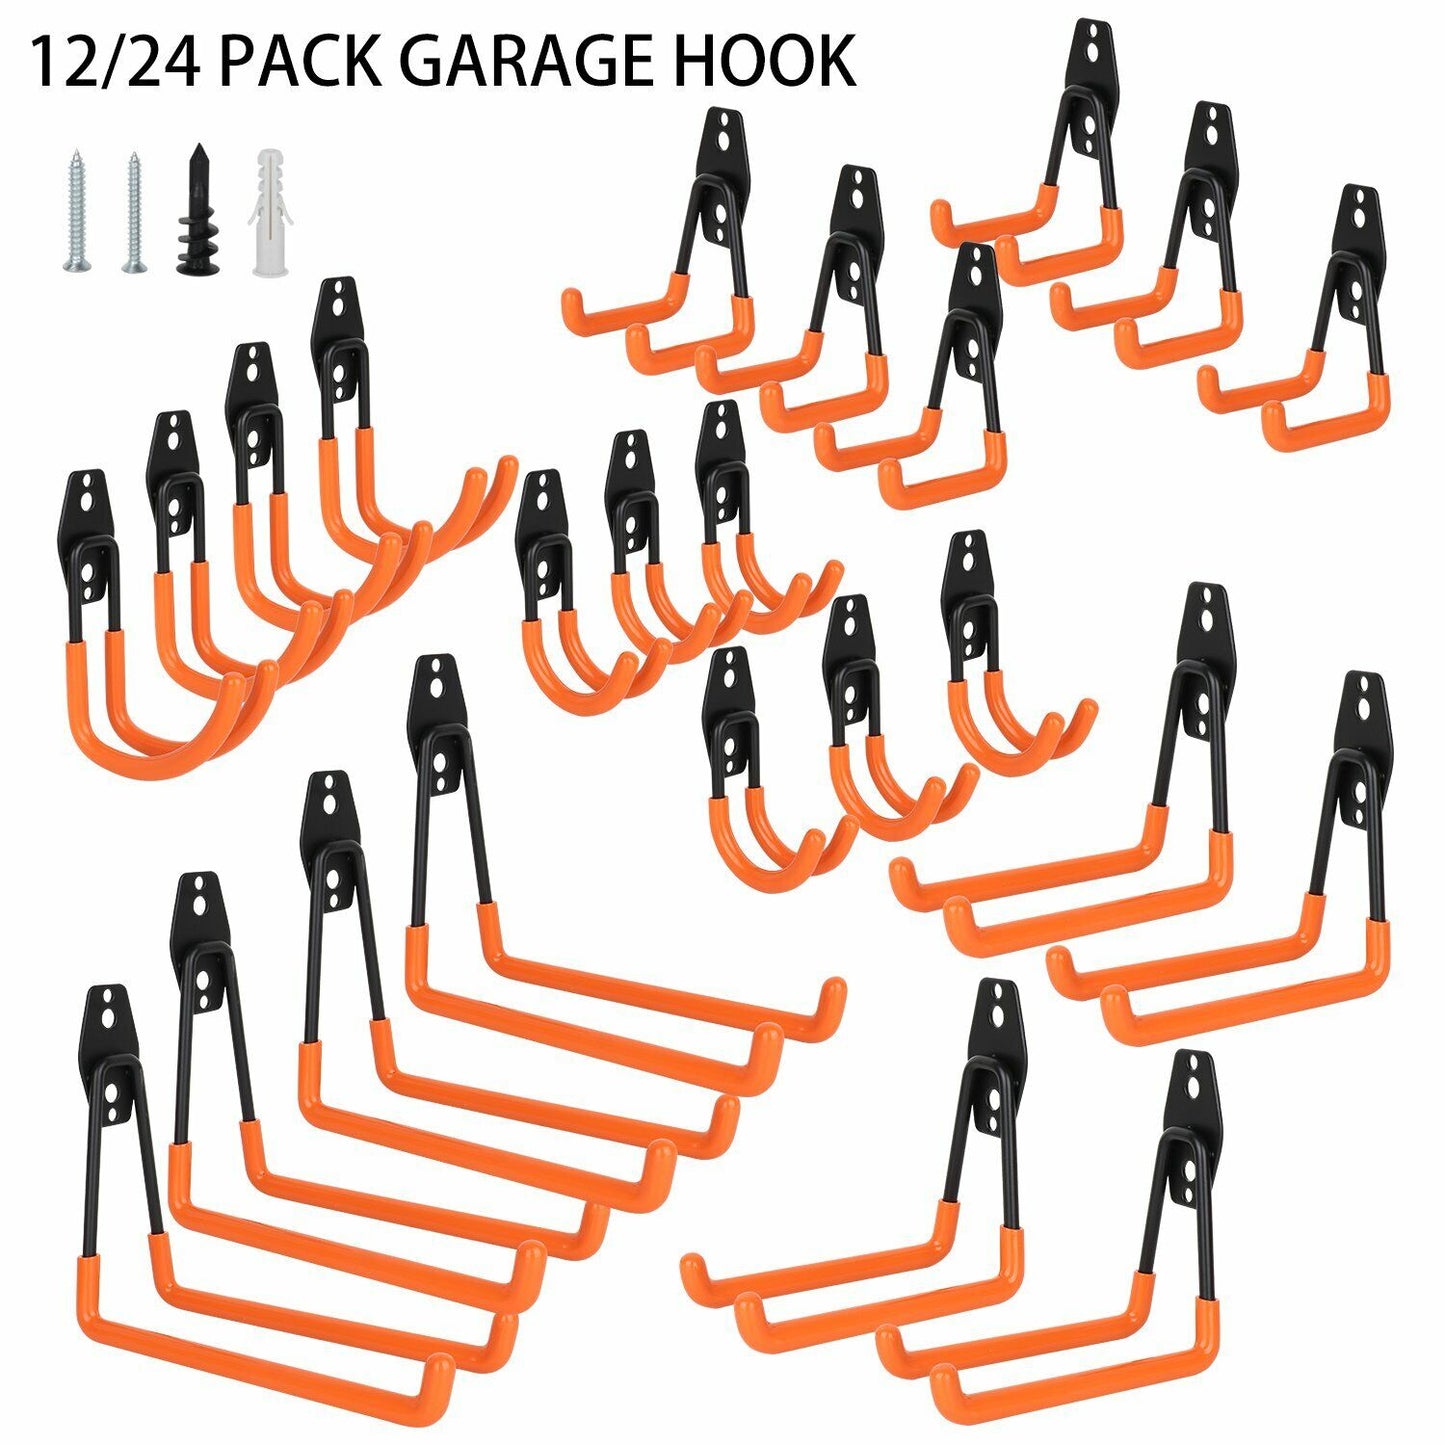 12/24 Pack Steel Garage Storage Utility Double Hooks Wall Organizer Tool Hanger